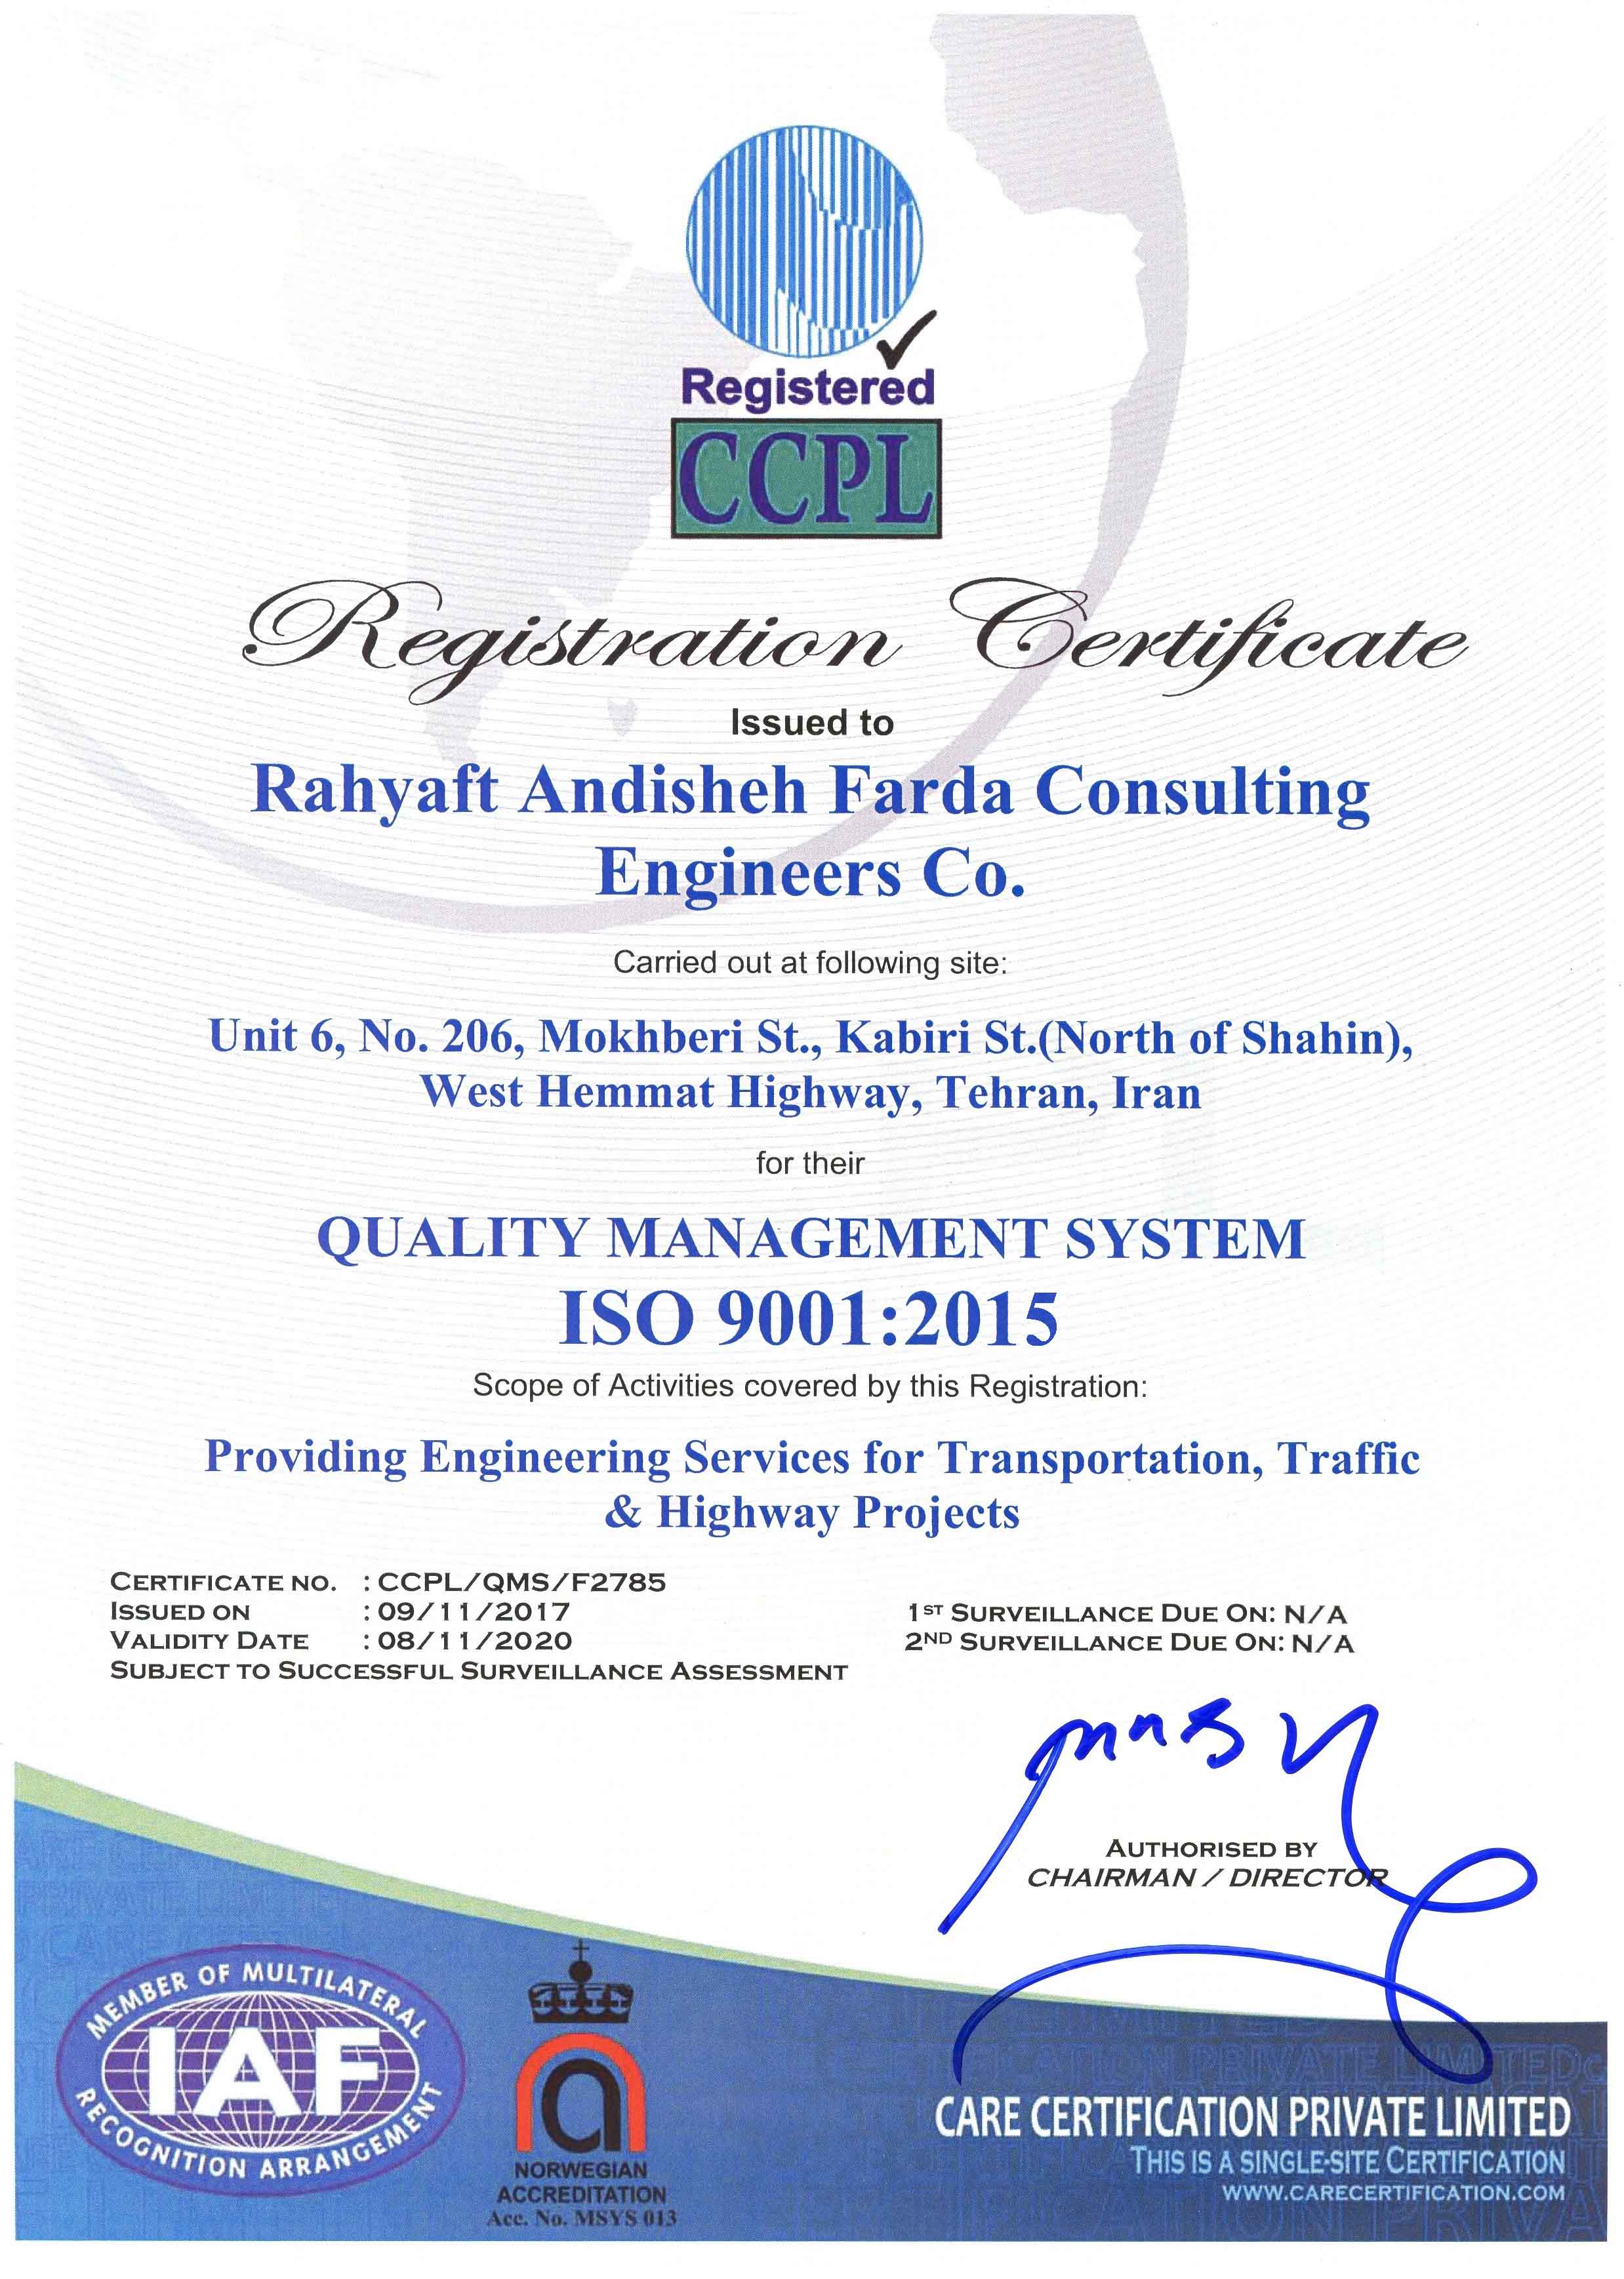 Registration Certification